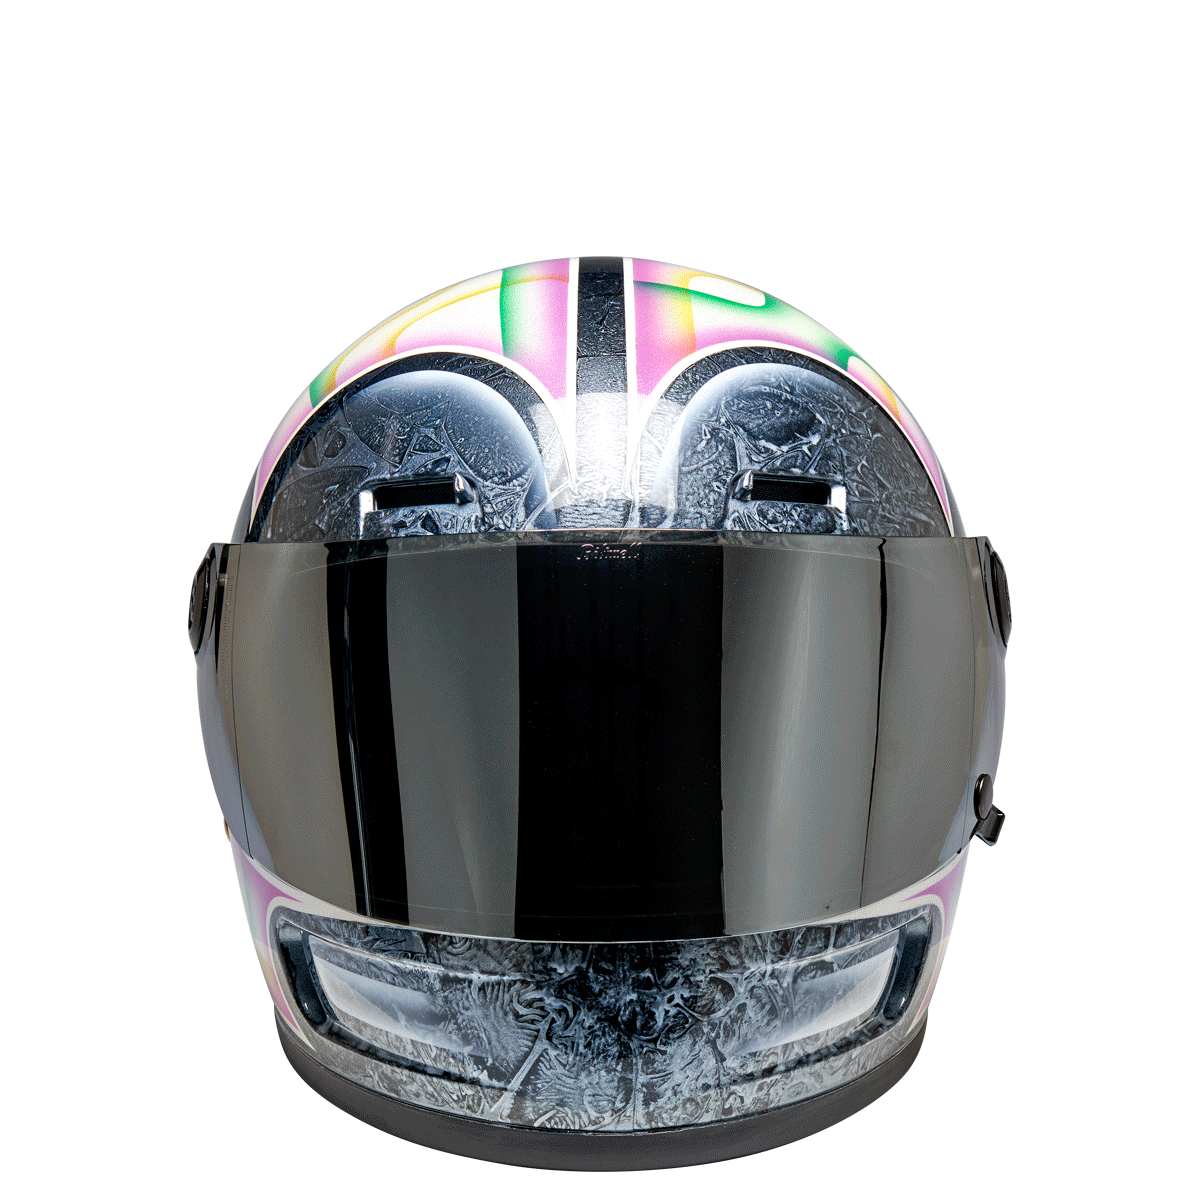 Custom Painted Gringo SV Helmet by Andrew Riffle